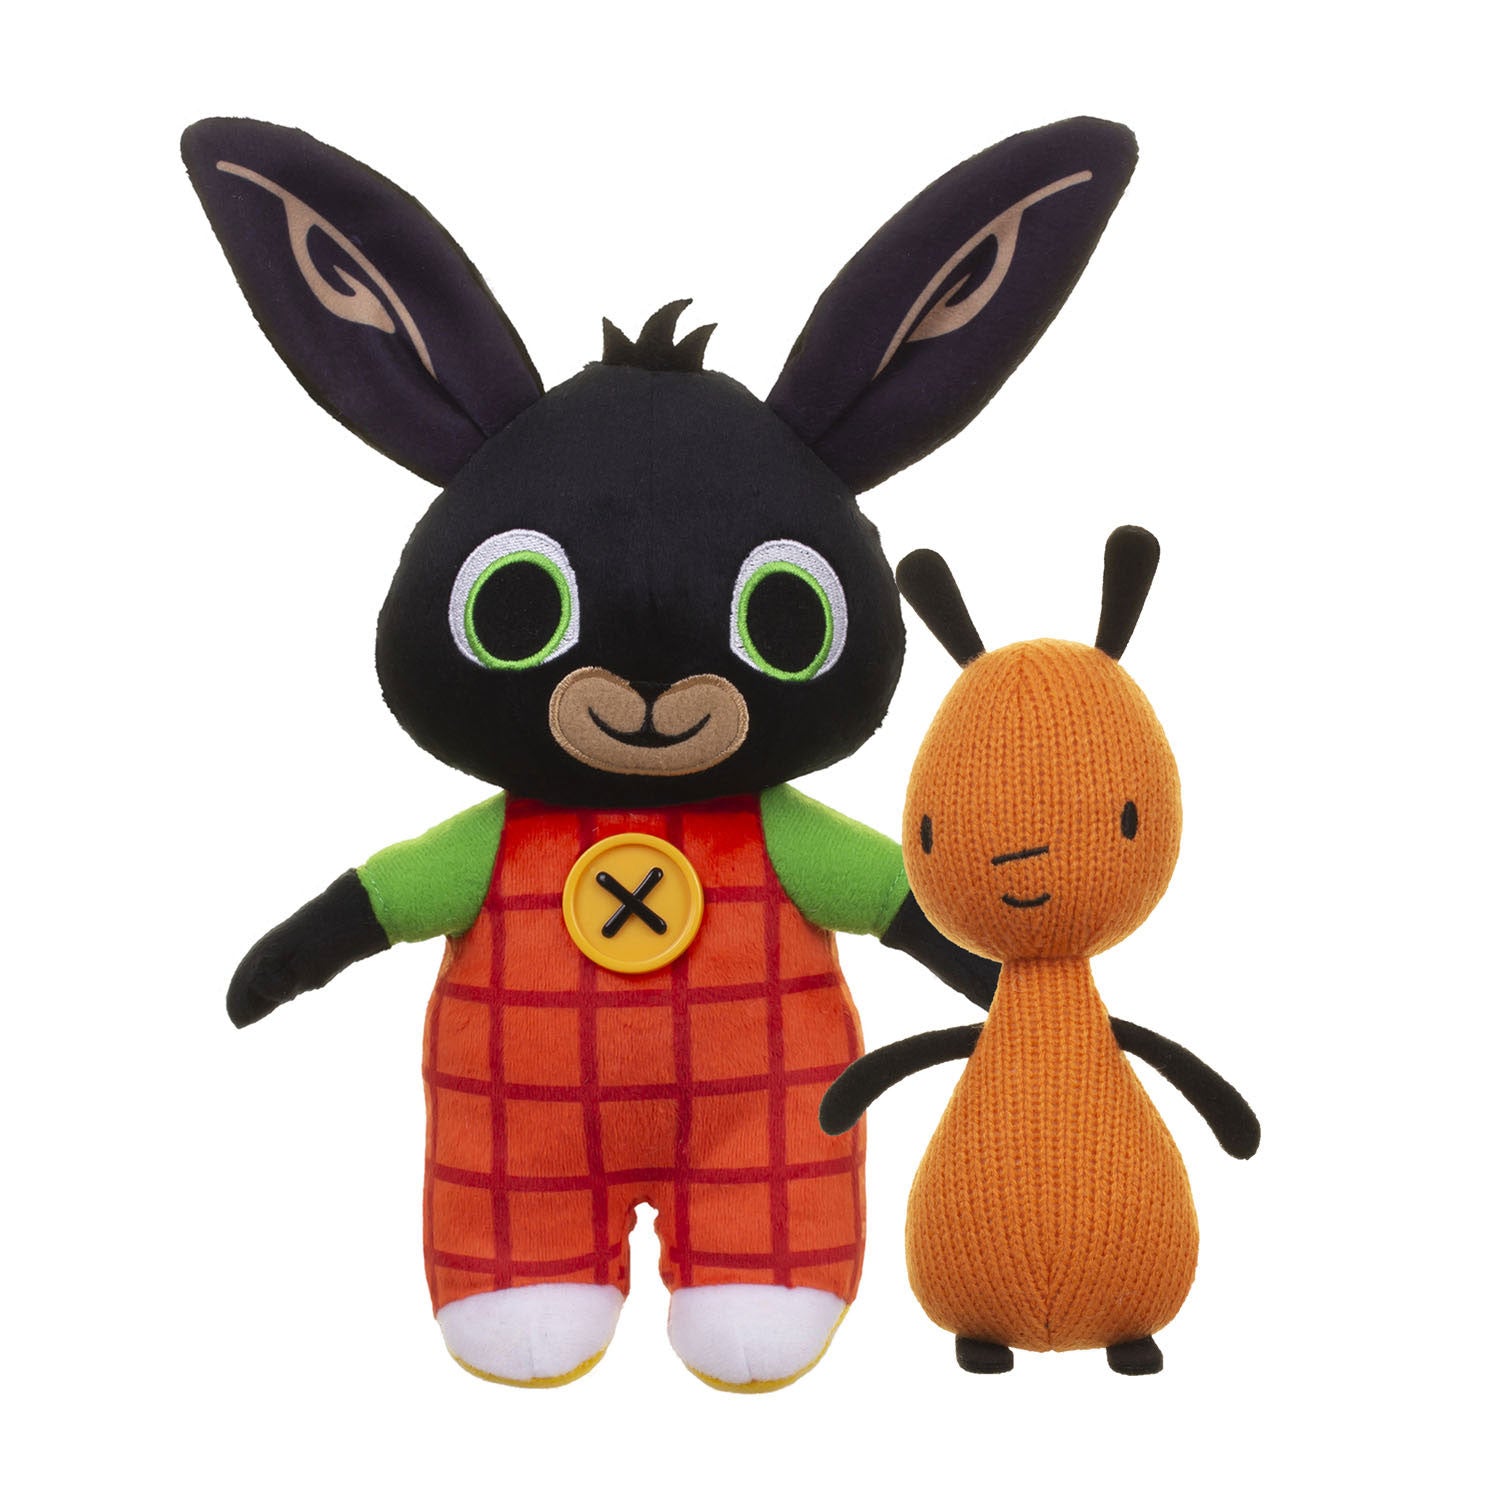 Bing Figurine Set 2 Pack Charlie i Koko Bunny Rabbit bambini giocattolo